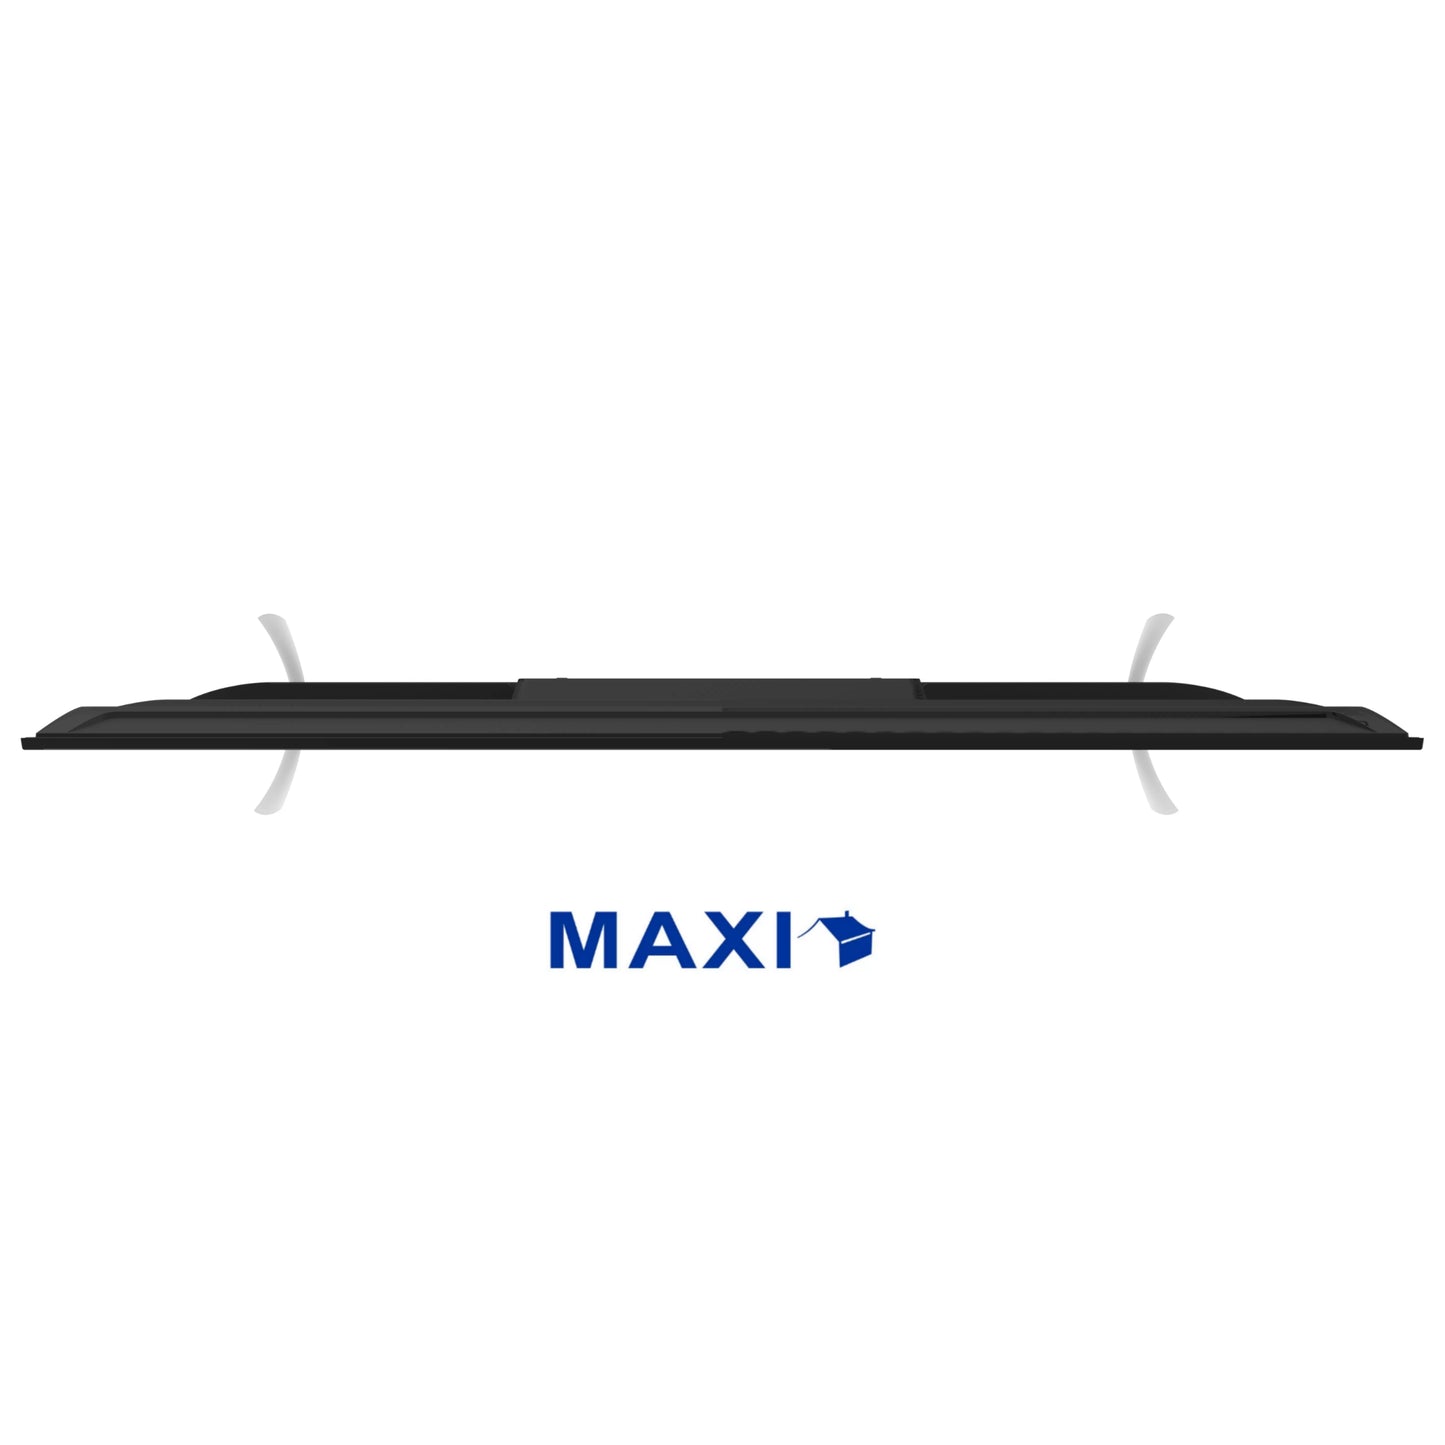 Maxi 70 Inch 70D2010 Smart Ultra HD LED TV + Netflix, Youtube, Miracast (Top View) - Brand New